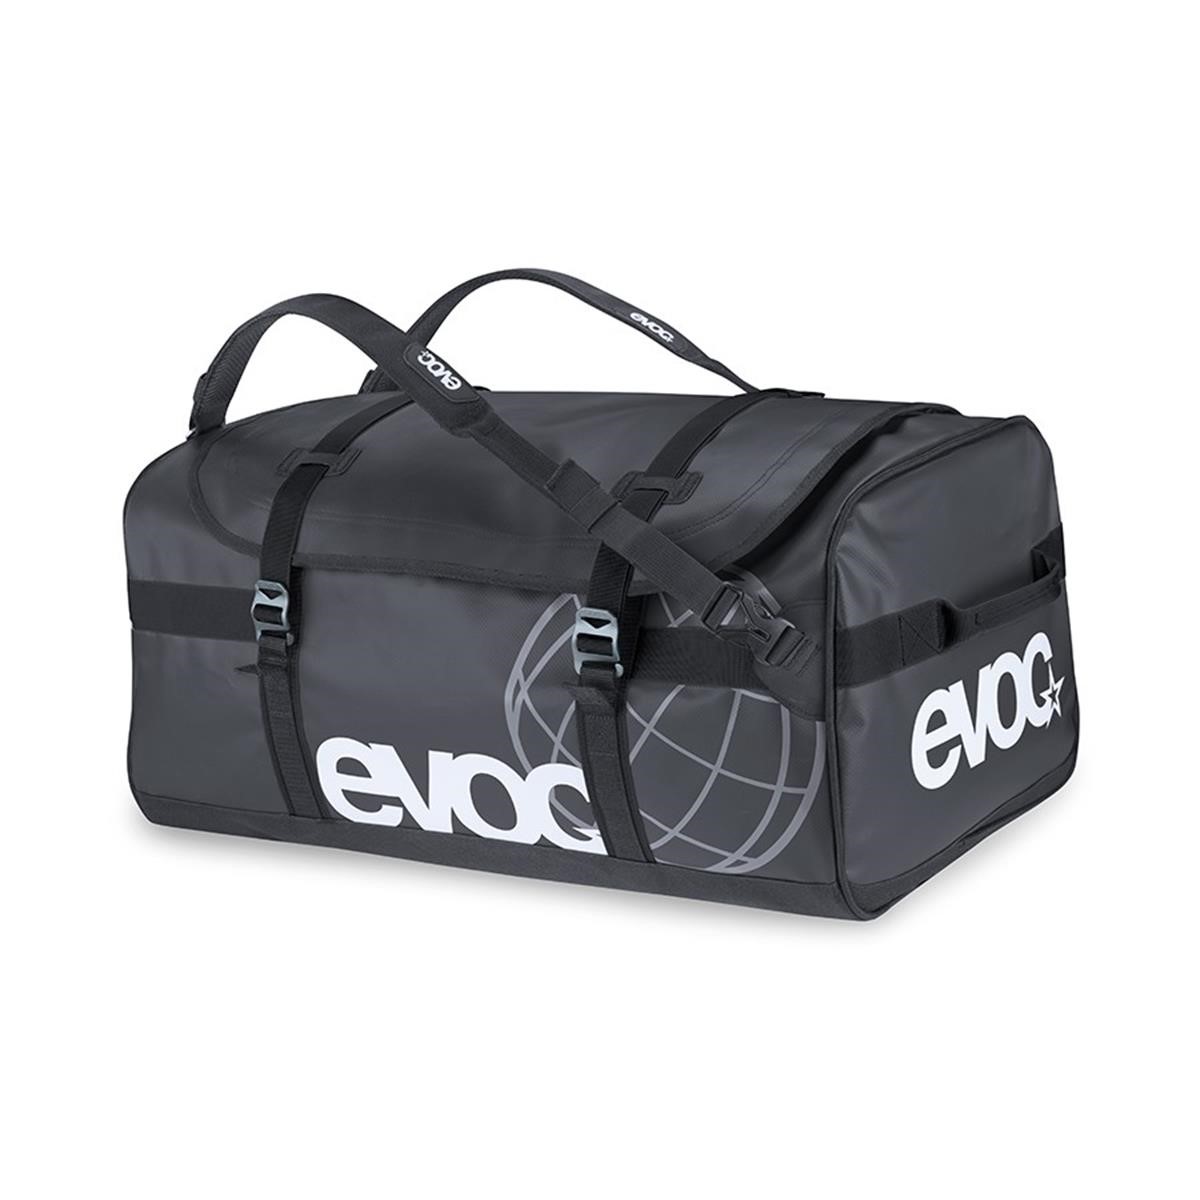 Evoc Gear Bag Duffle Bag Black, 40 Liter